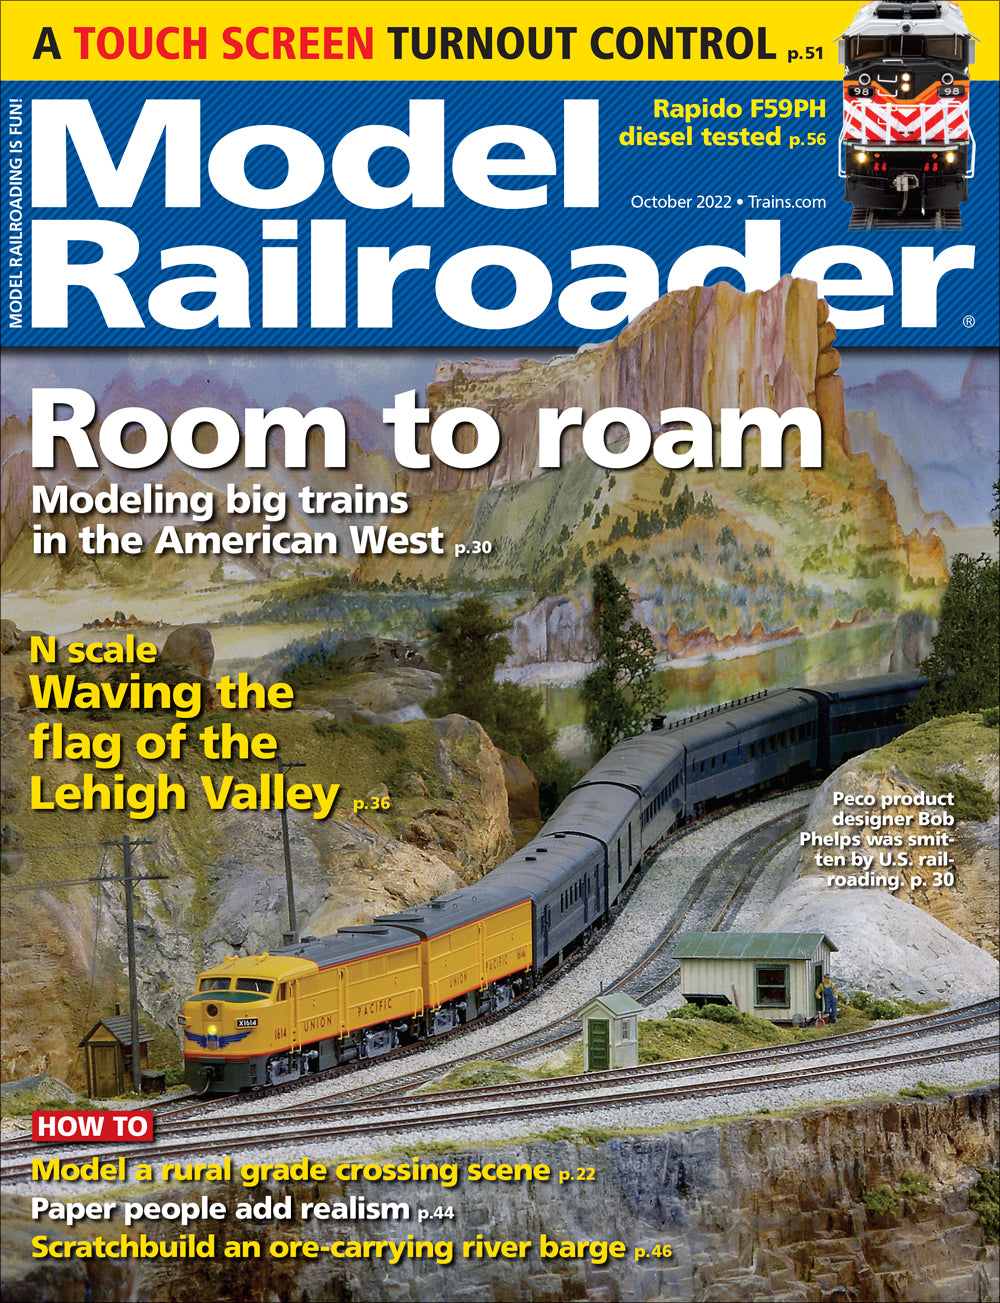 Model Railroader - Magazine - Vol. 89 - Issue 10 - Oct 2022